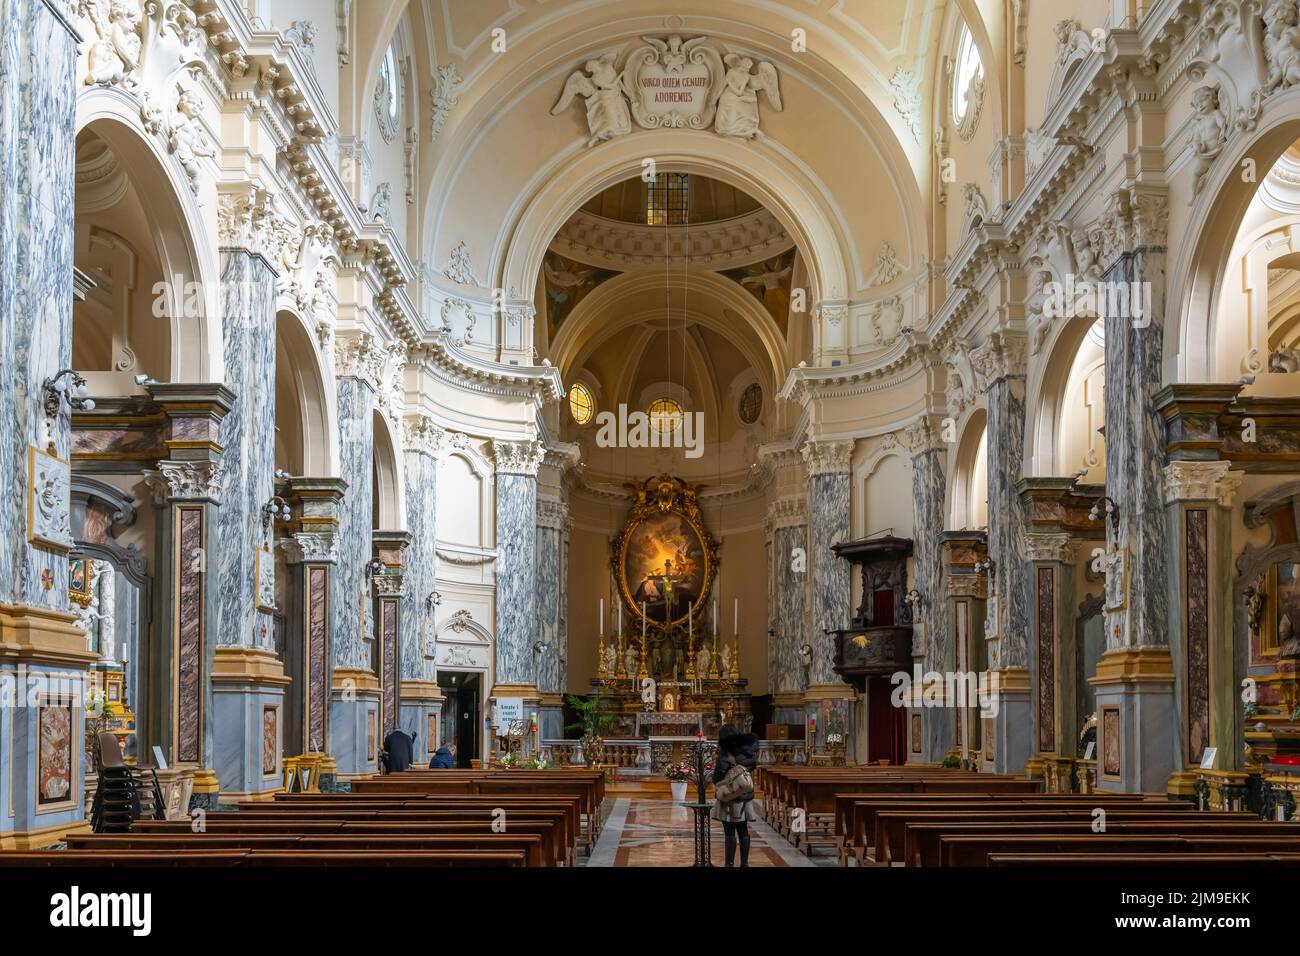 Turin, Italy - February 25, 2022: The interior of the Chiesa della Santissima Annunziata church, with visitors, in Turin, Piedmont, Northern Italy Stock Photo